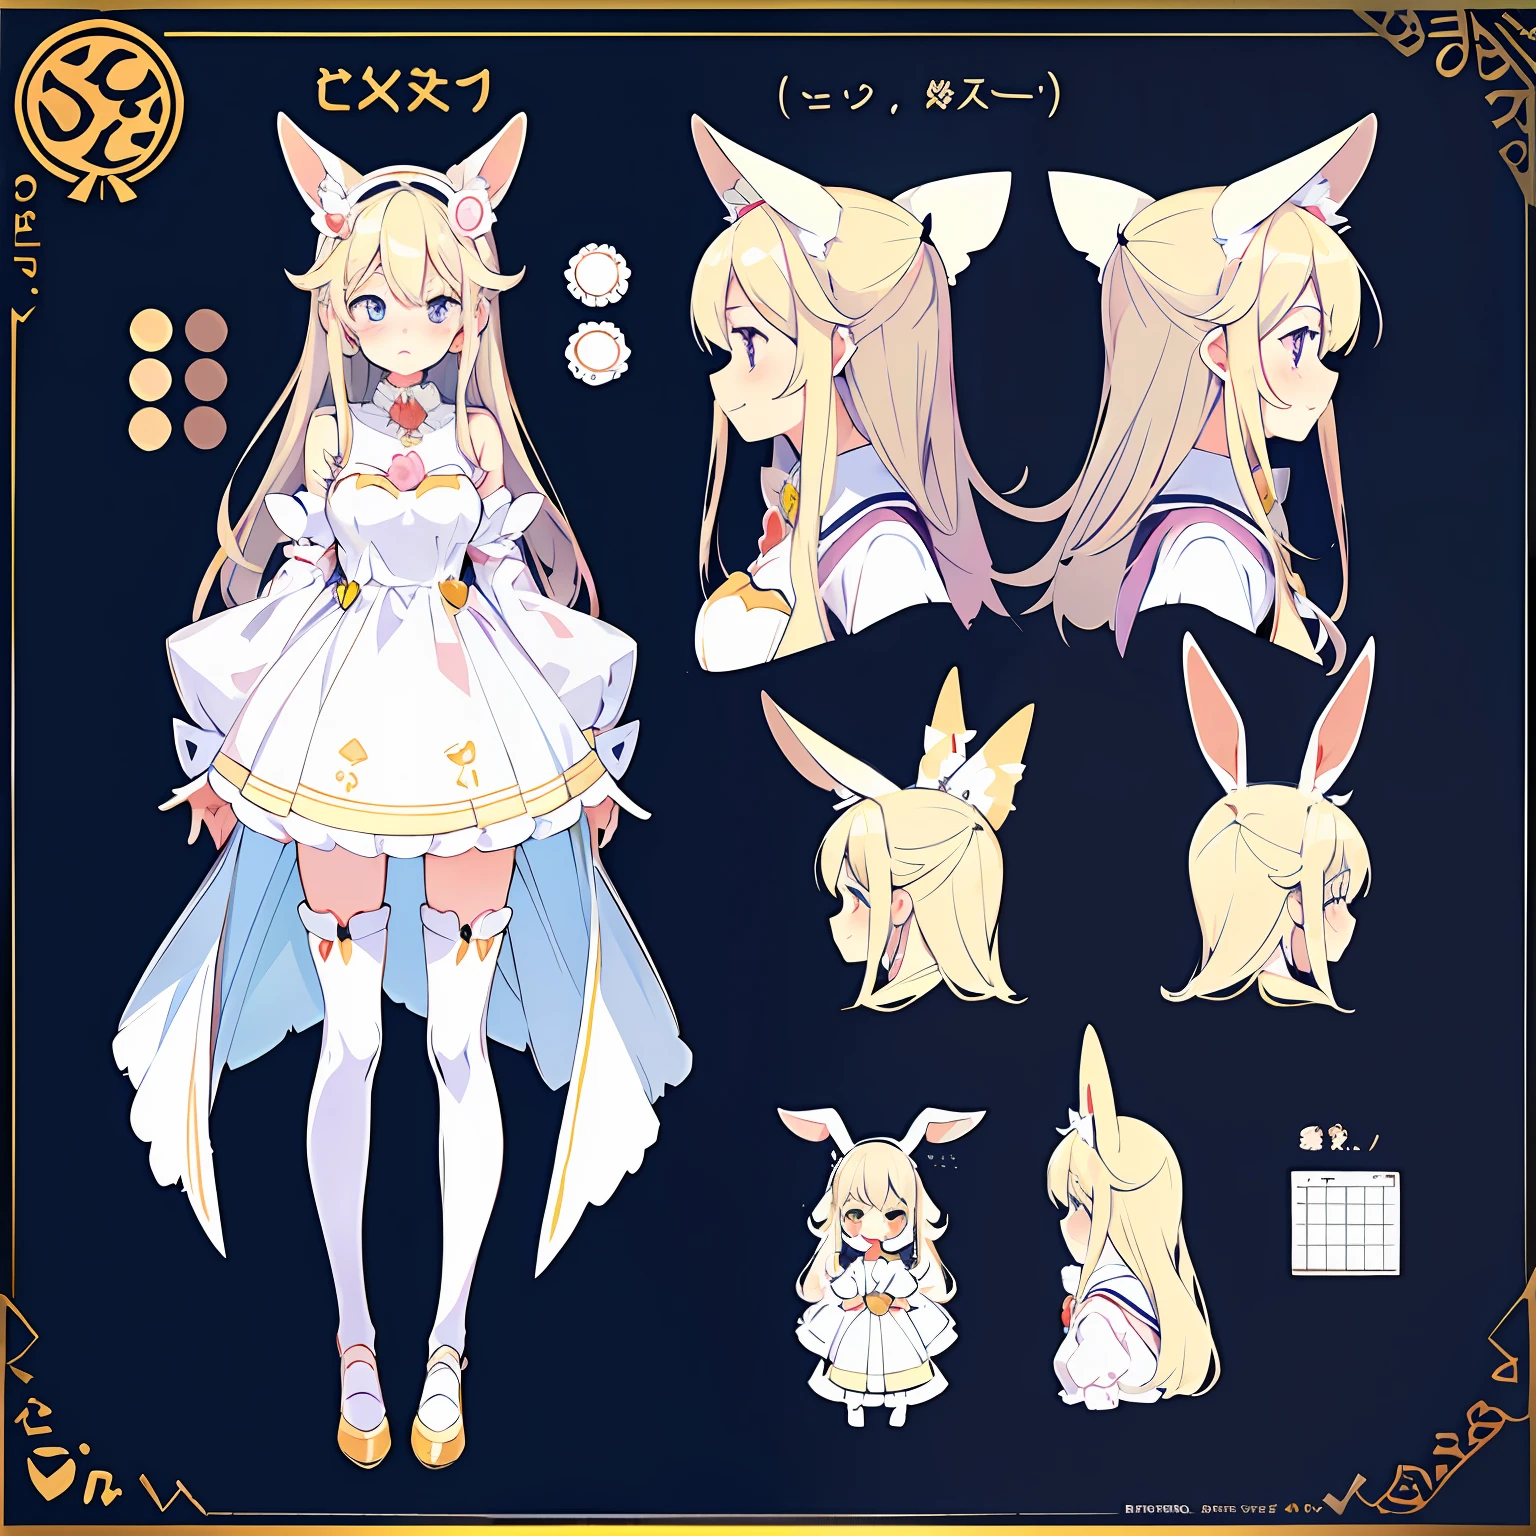 Rabbit-eared girl　(Maximum softness:1.2),(Cute illustration:1.2), (Character Sheet:1.4), (Concept art:1.3)